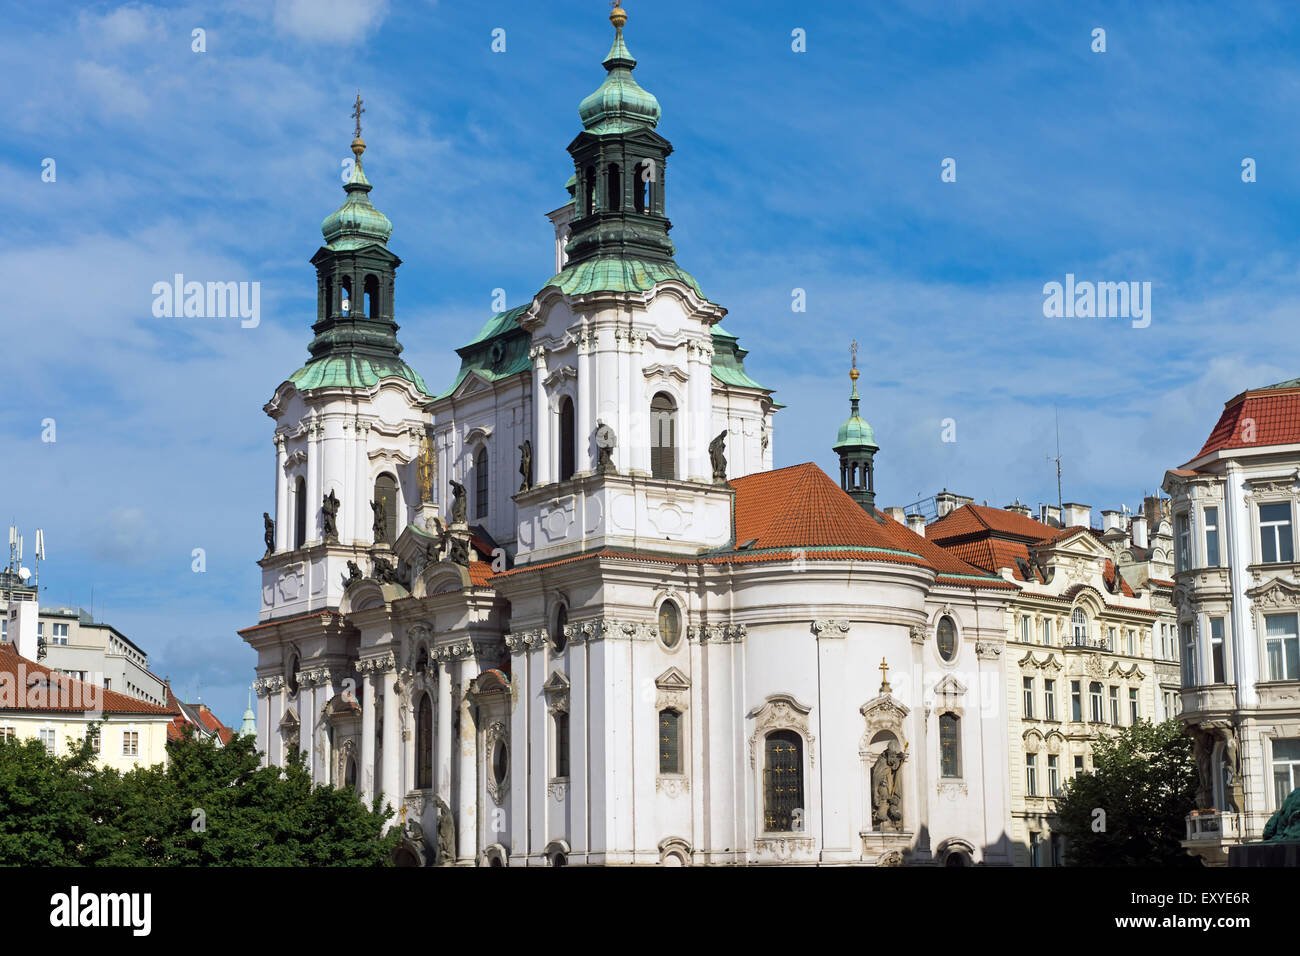 The baroque church St. Nicolas in Prague, Czech Republic Stock Photo